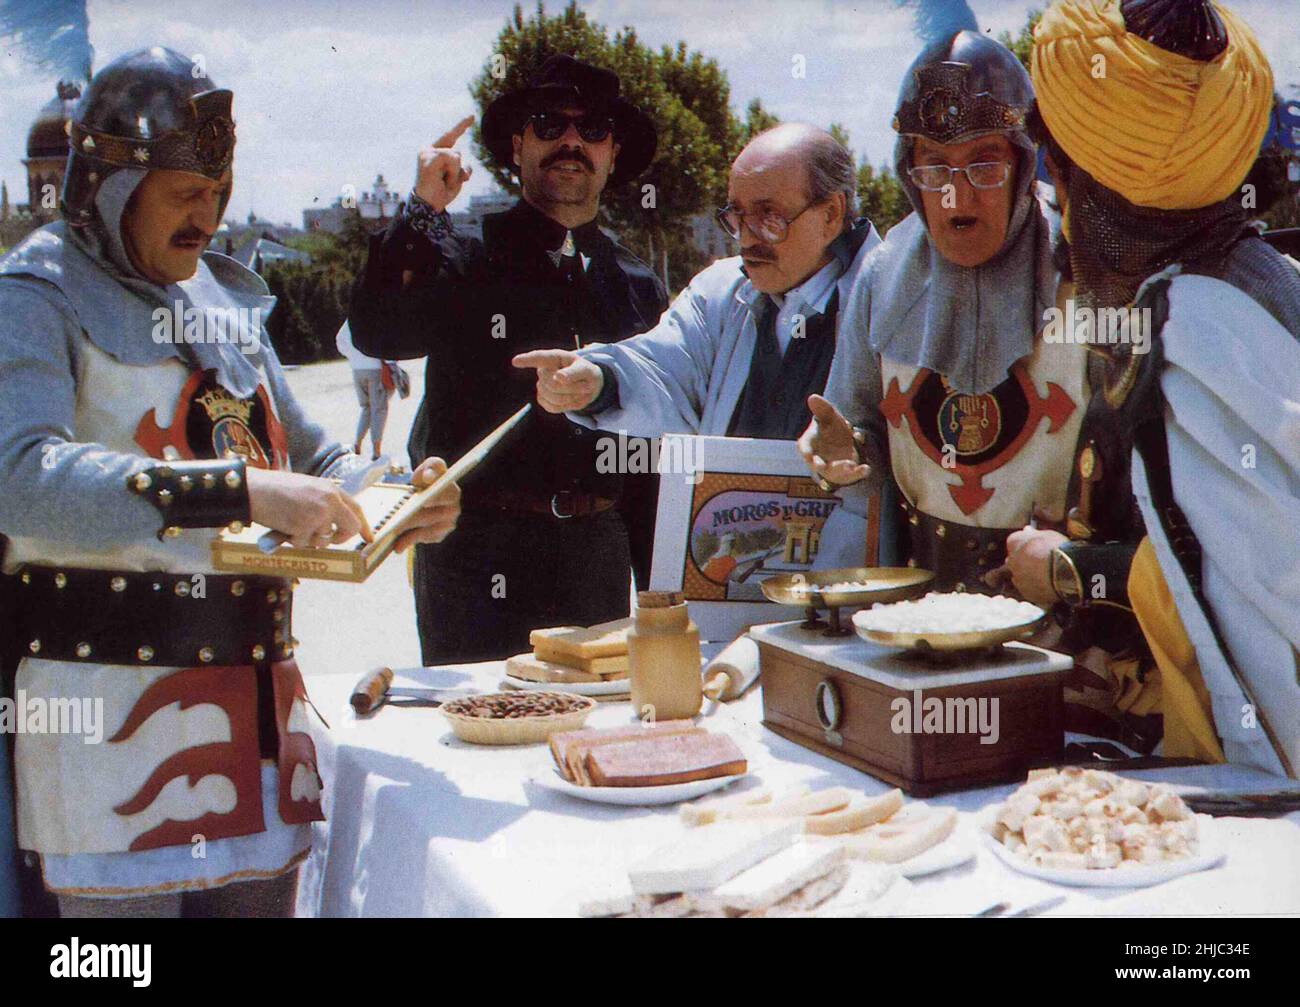 ANTONIO RESINES and JOSE LUIS LOPEZ VAZQUEZ in MOORS AND CHRISTIANS (1987) -Original title: MOROS Y CRISTIANOS-, directed by LUIS GARCIA BERLANGA. Credit: ANOLA FILMS / Album Stock Photo